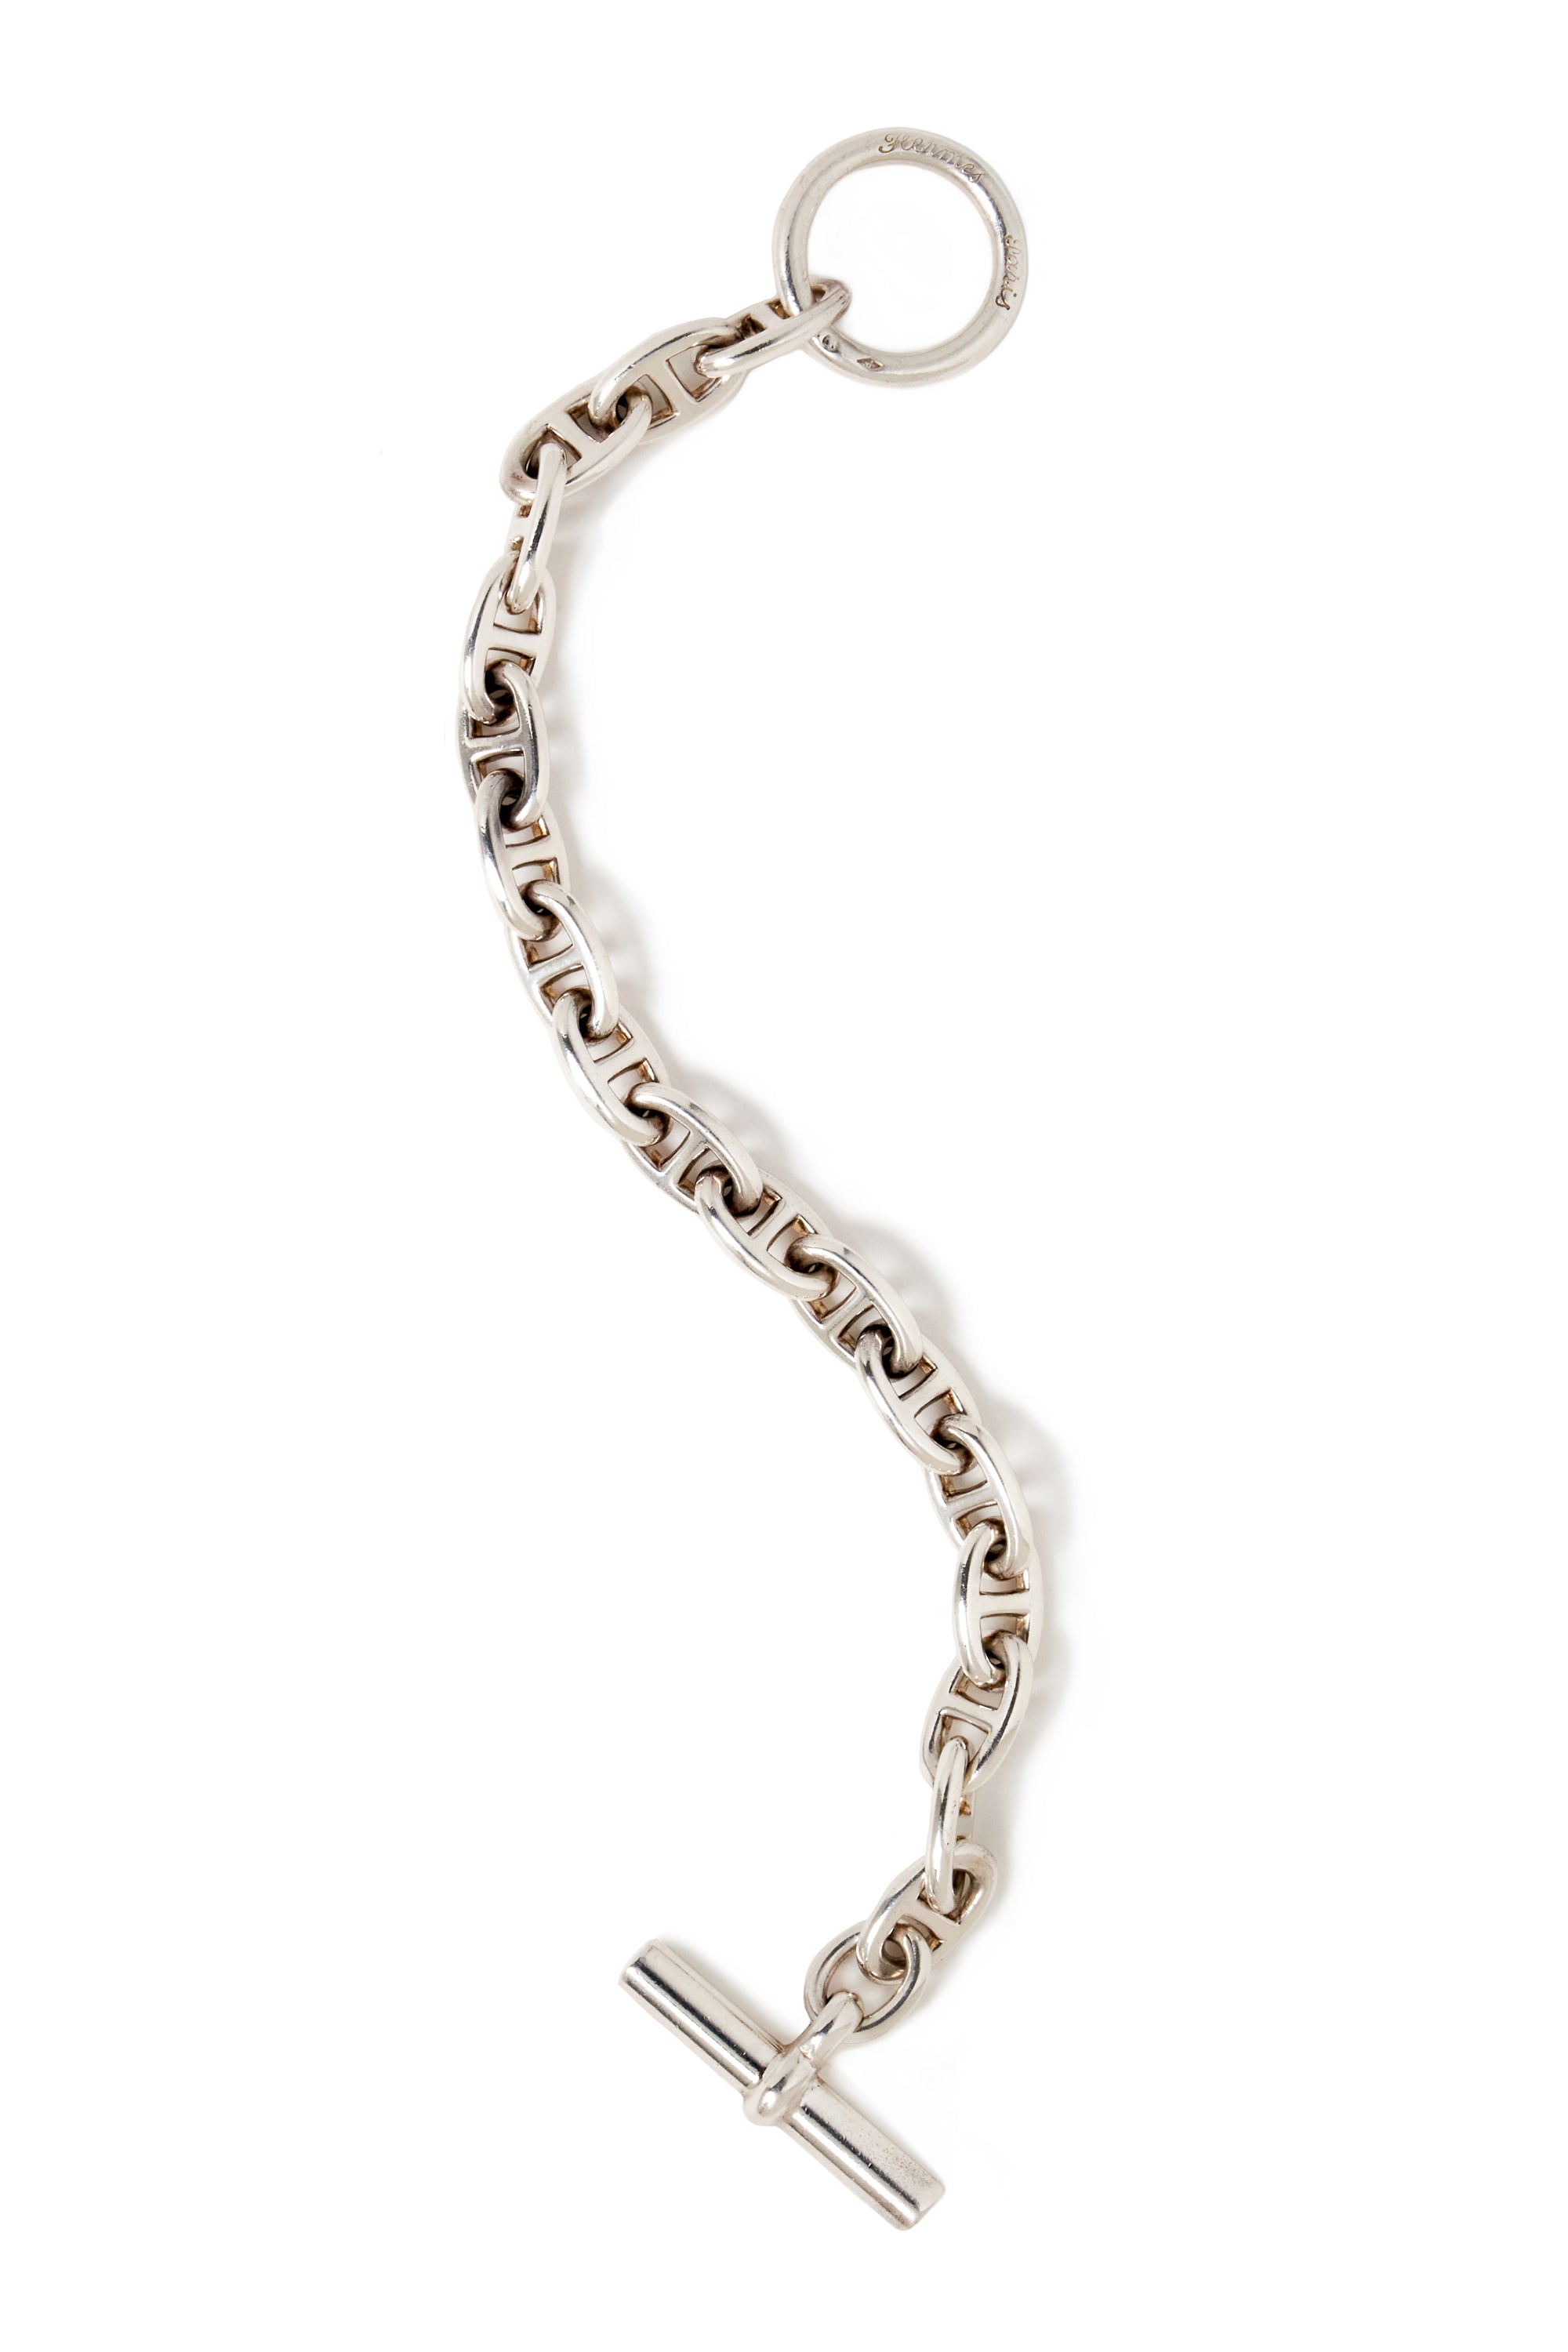 Hermes chain d'anchre Sterling Silver Bracelet